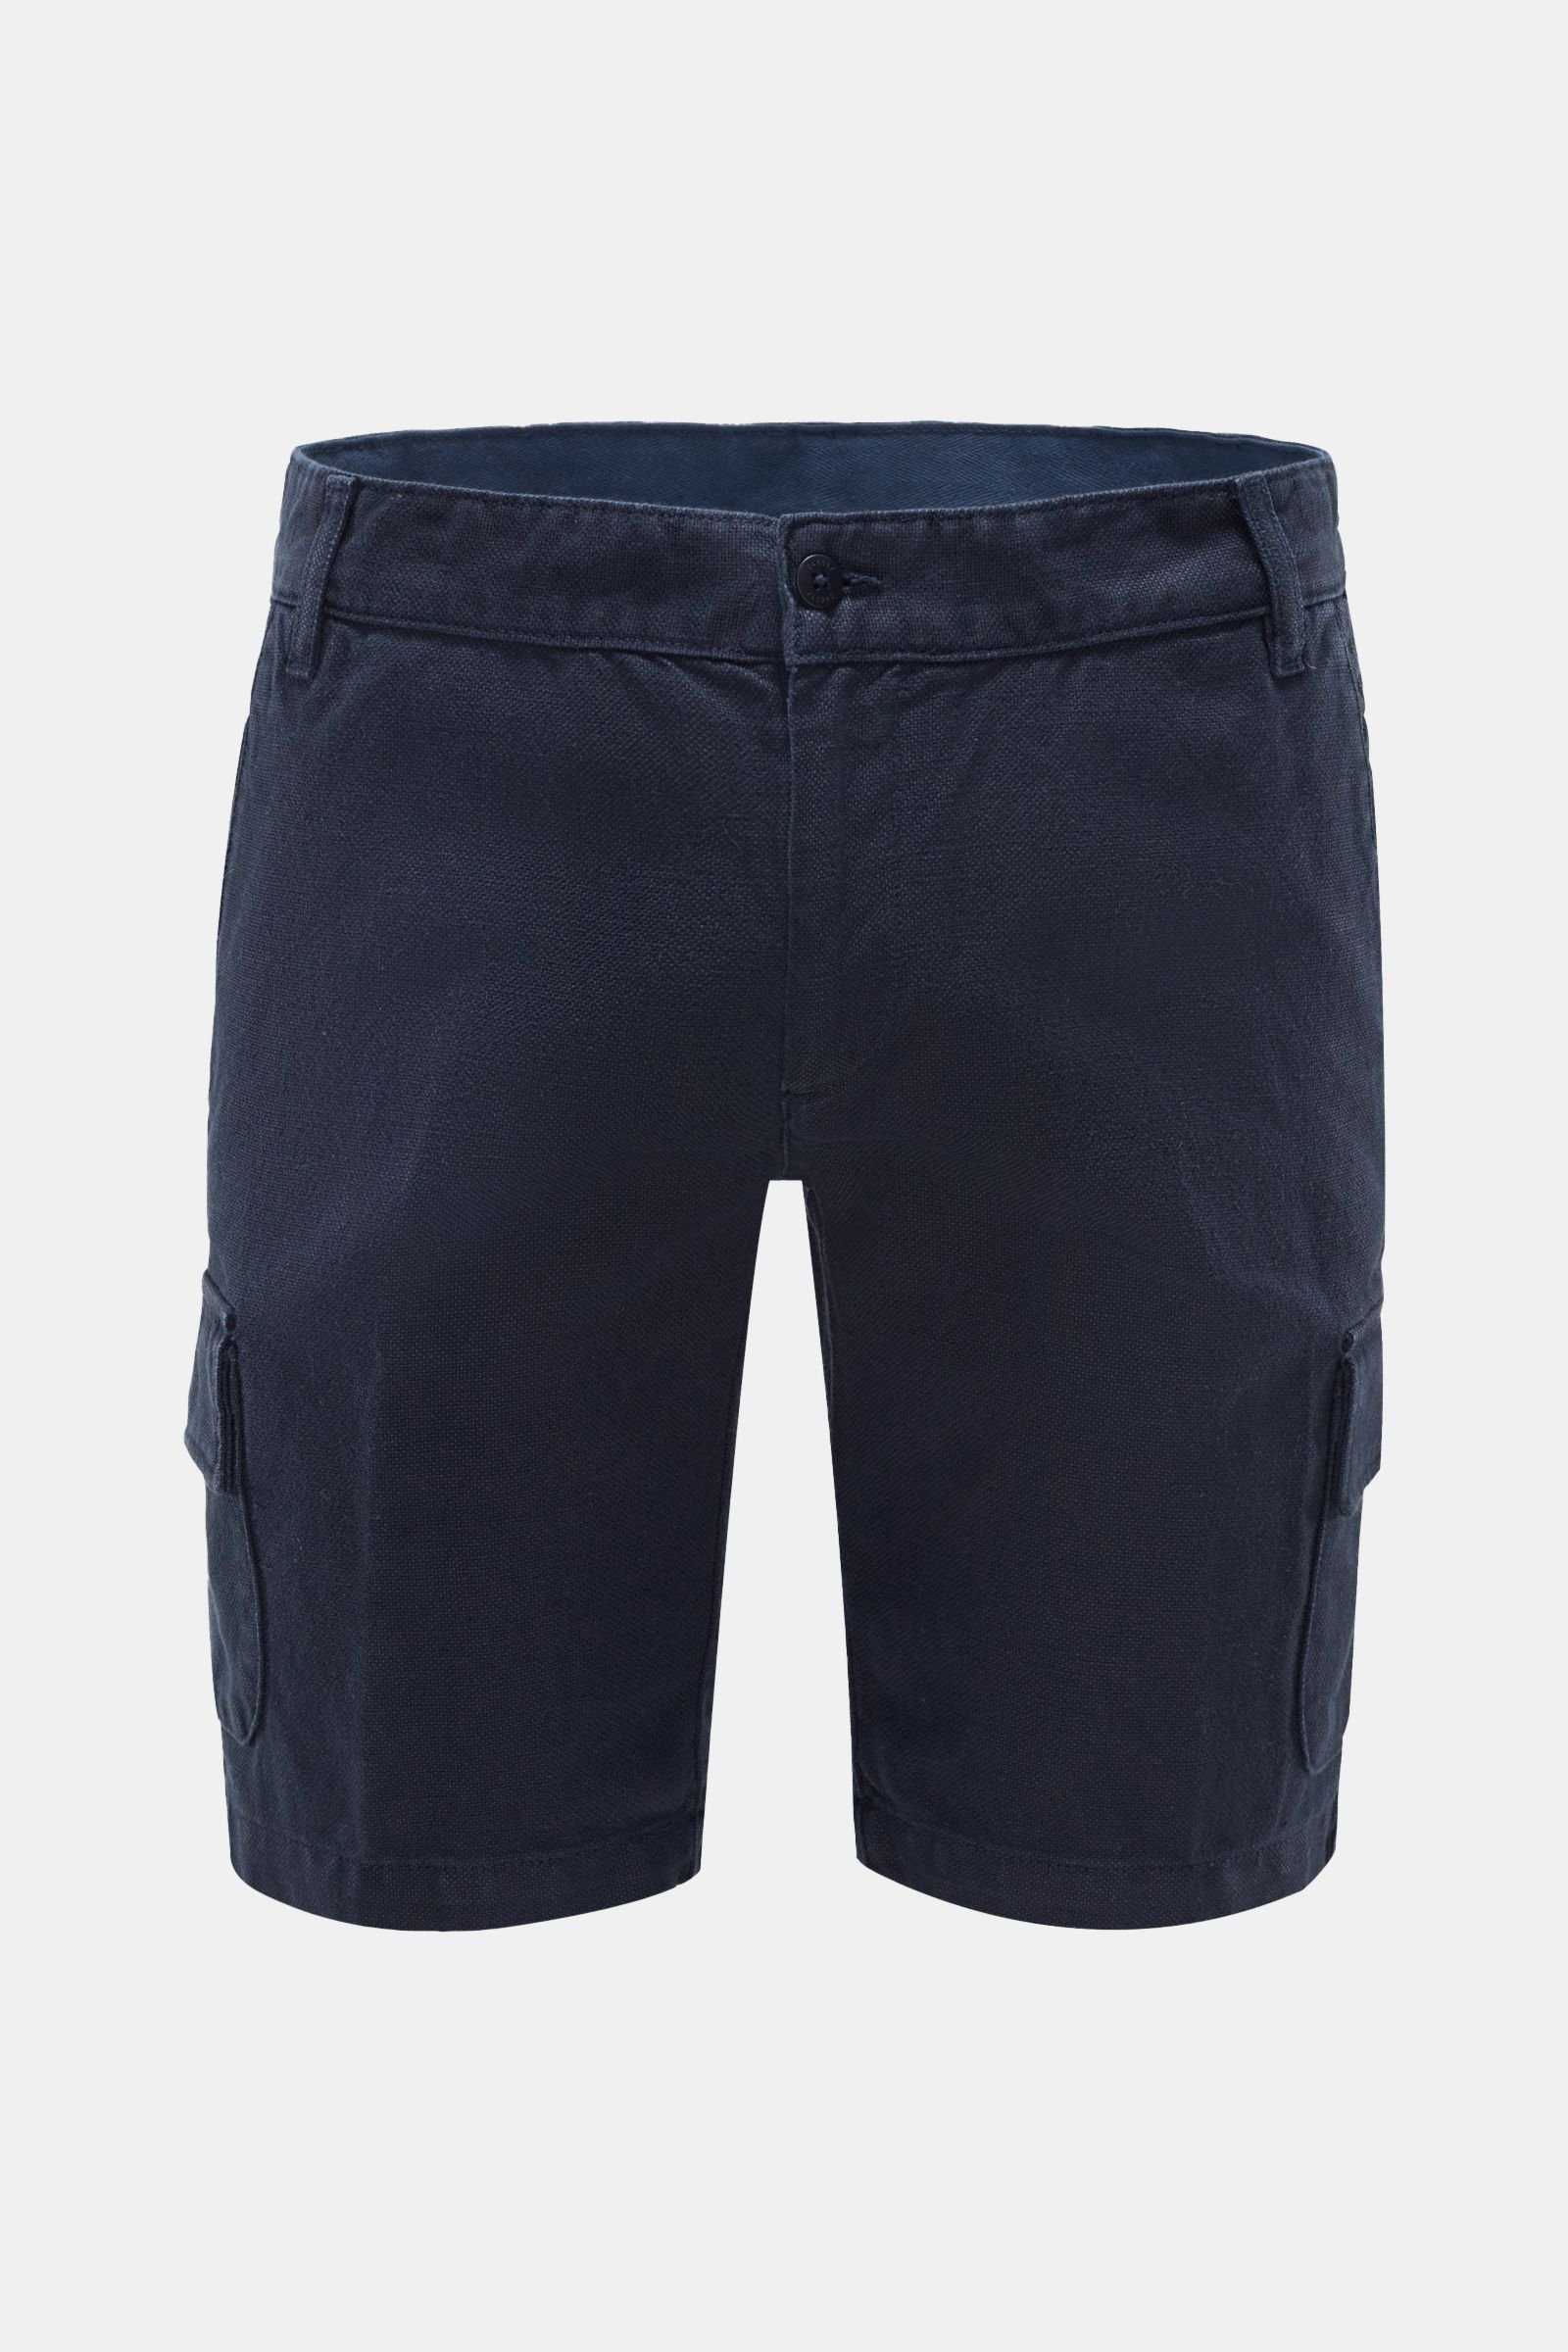 navy cargo shorts